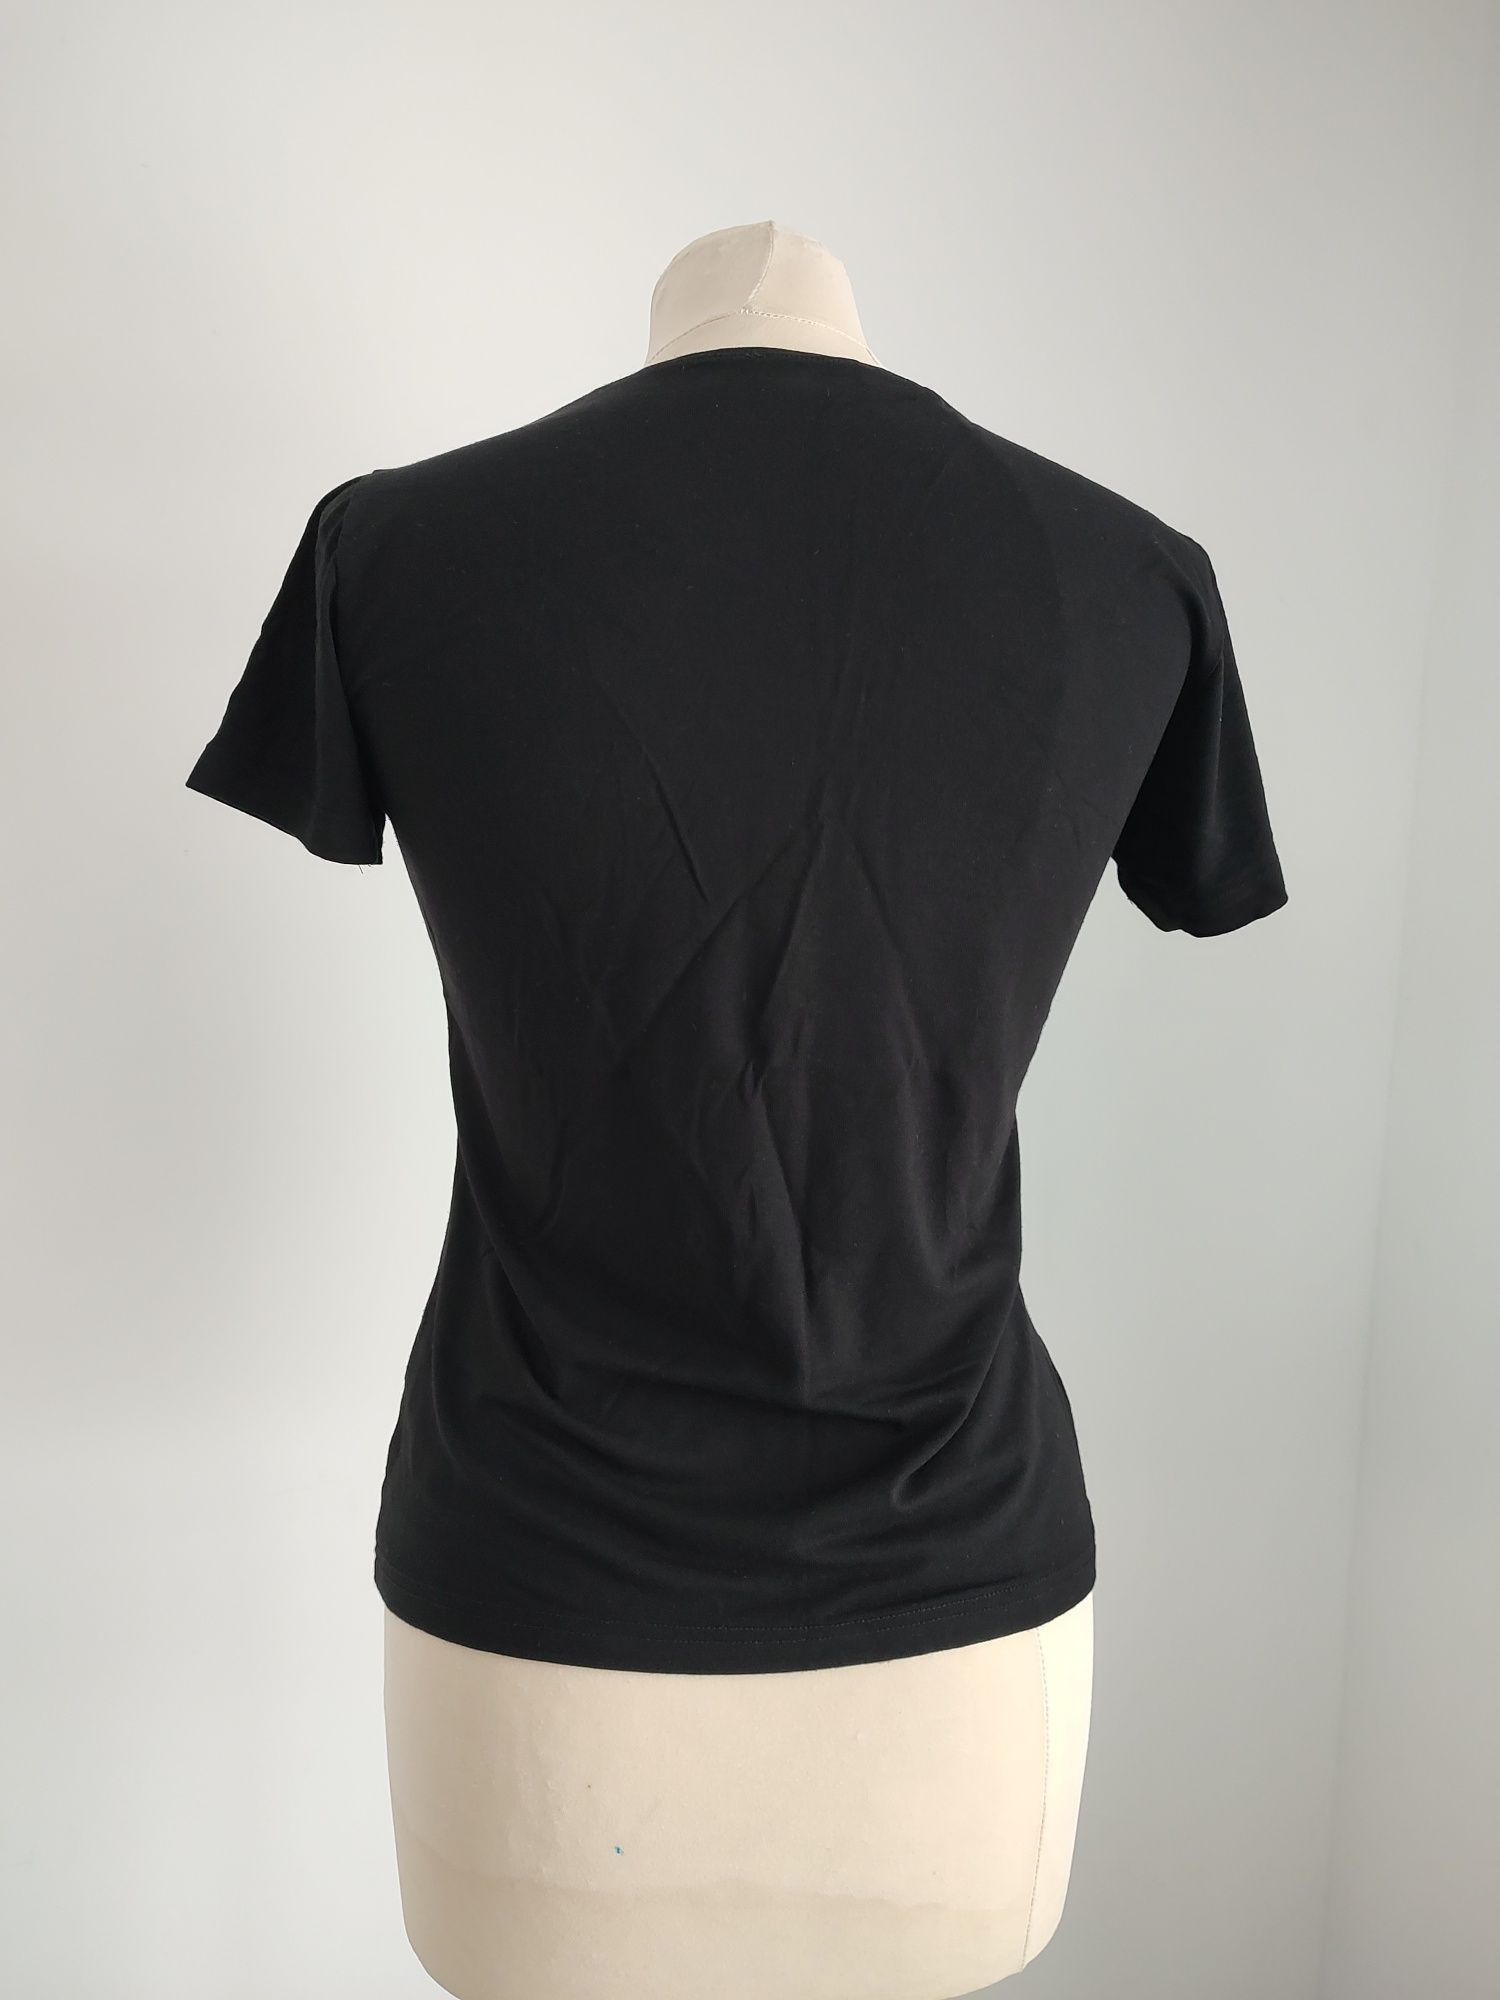 Koszulka t-shirt Esprit damska M czarna srebrny print